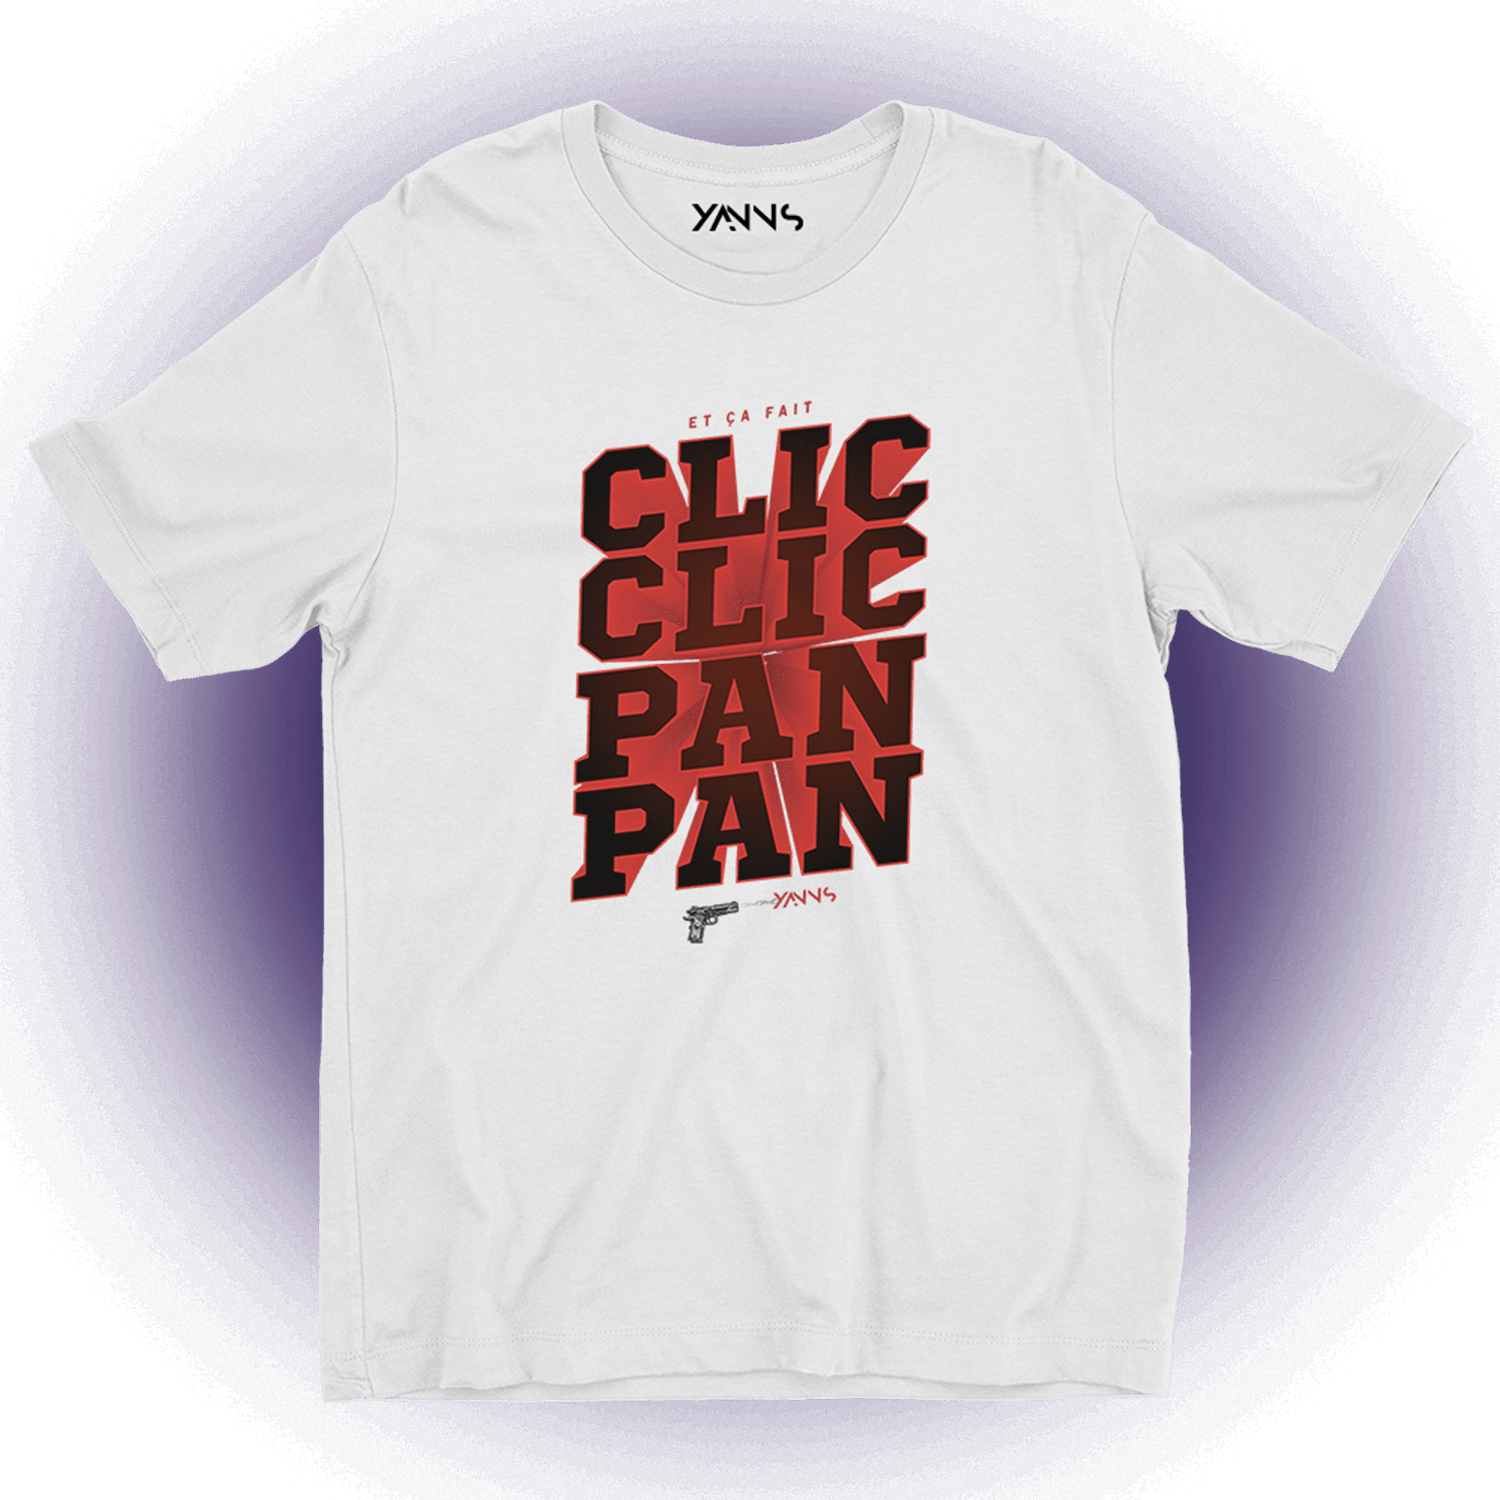 T-SHIRT CLIC CLIC PAN PAN Merchandising officiel de Yanns Blanc - 24,90 €  Yanns Shop